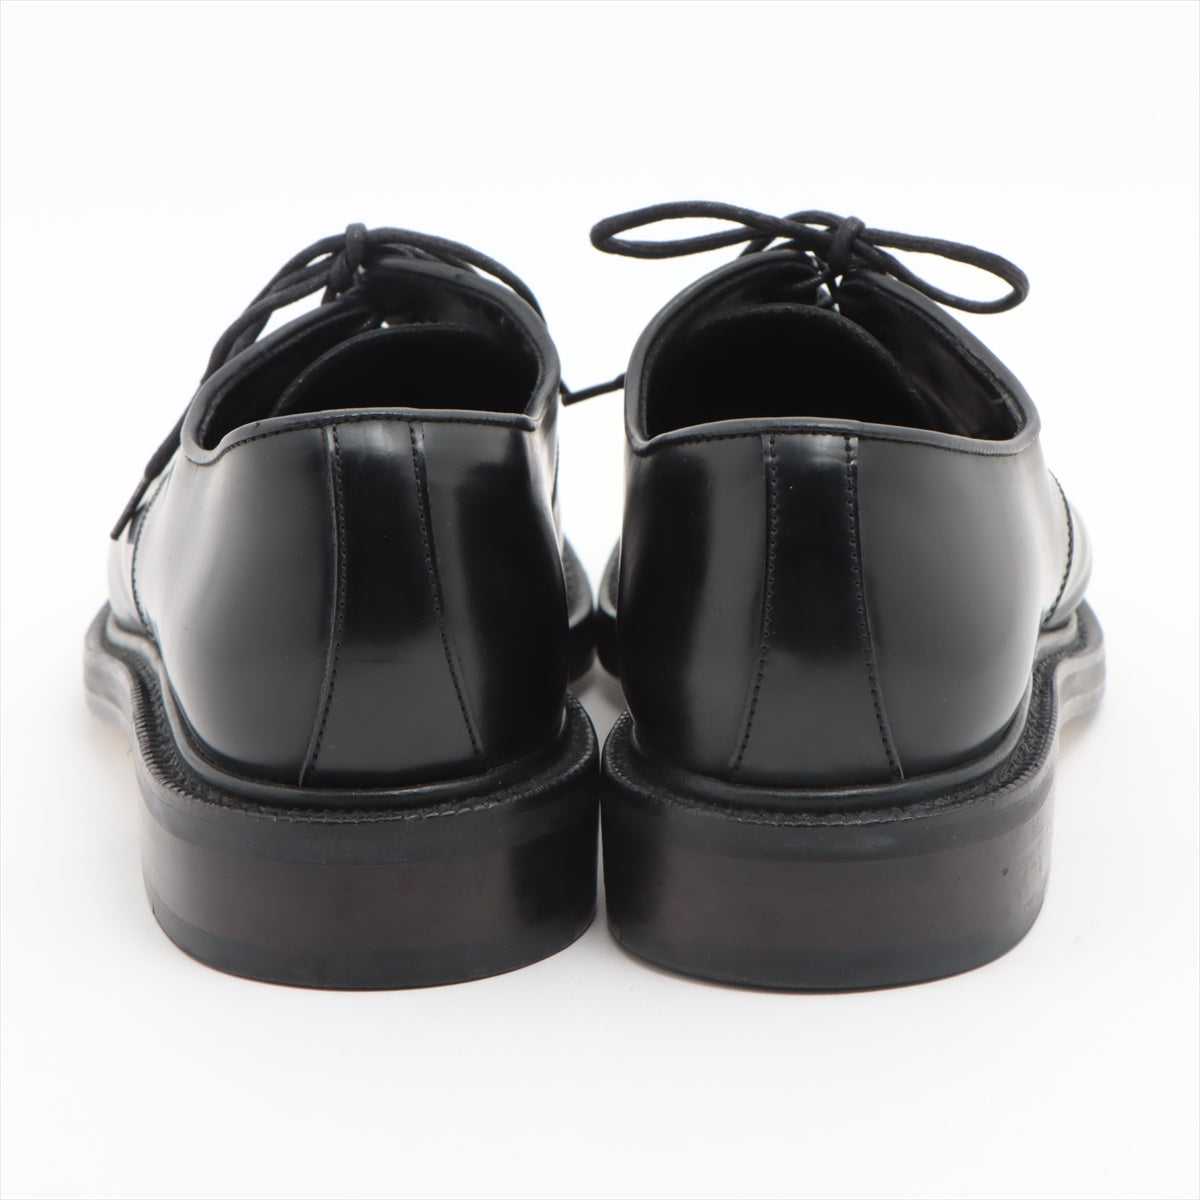 Loewe Leather Shoes 37  Black